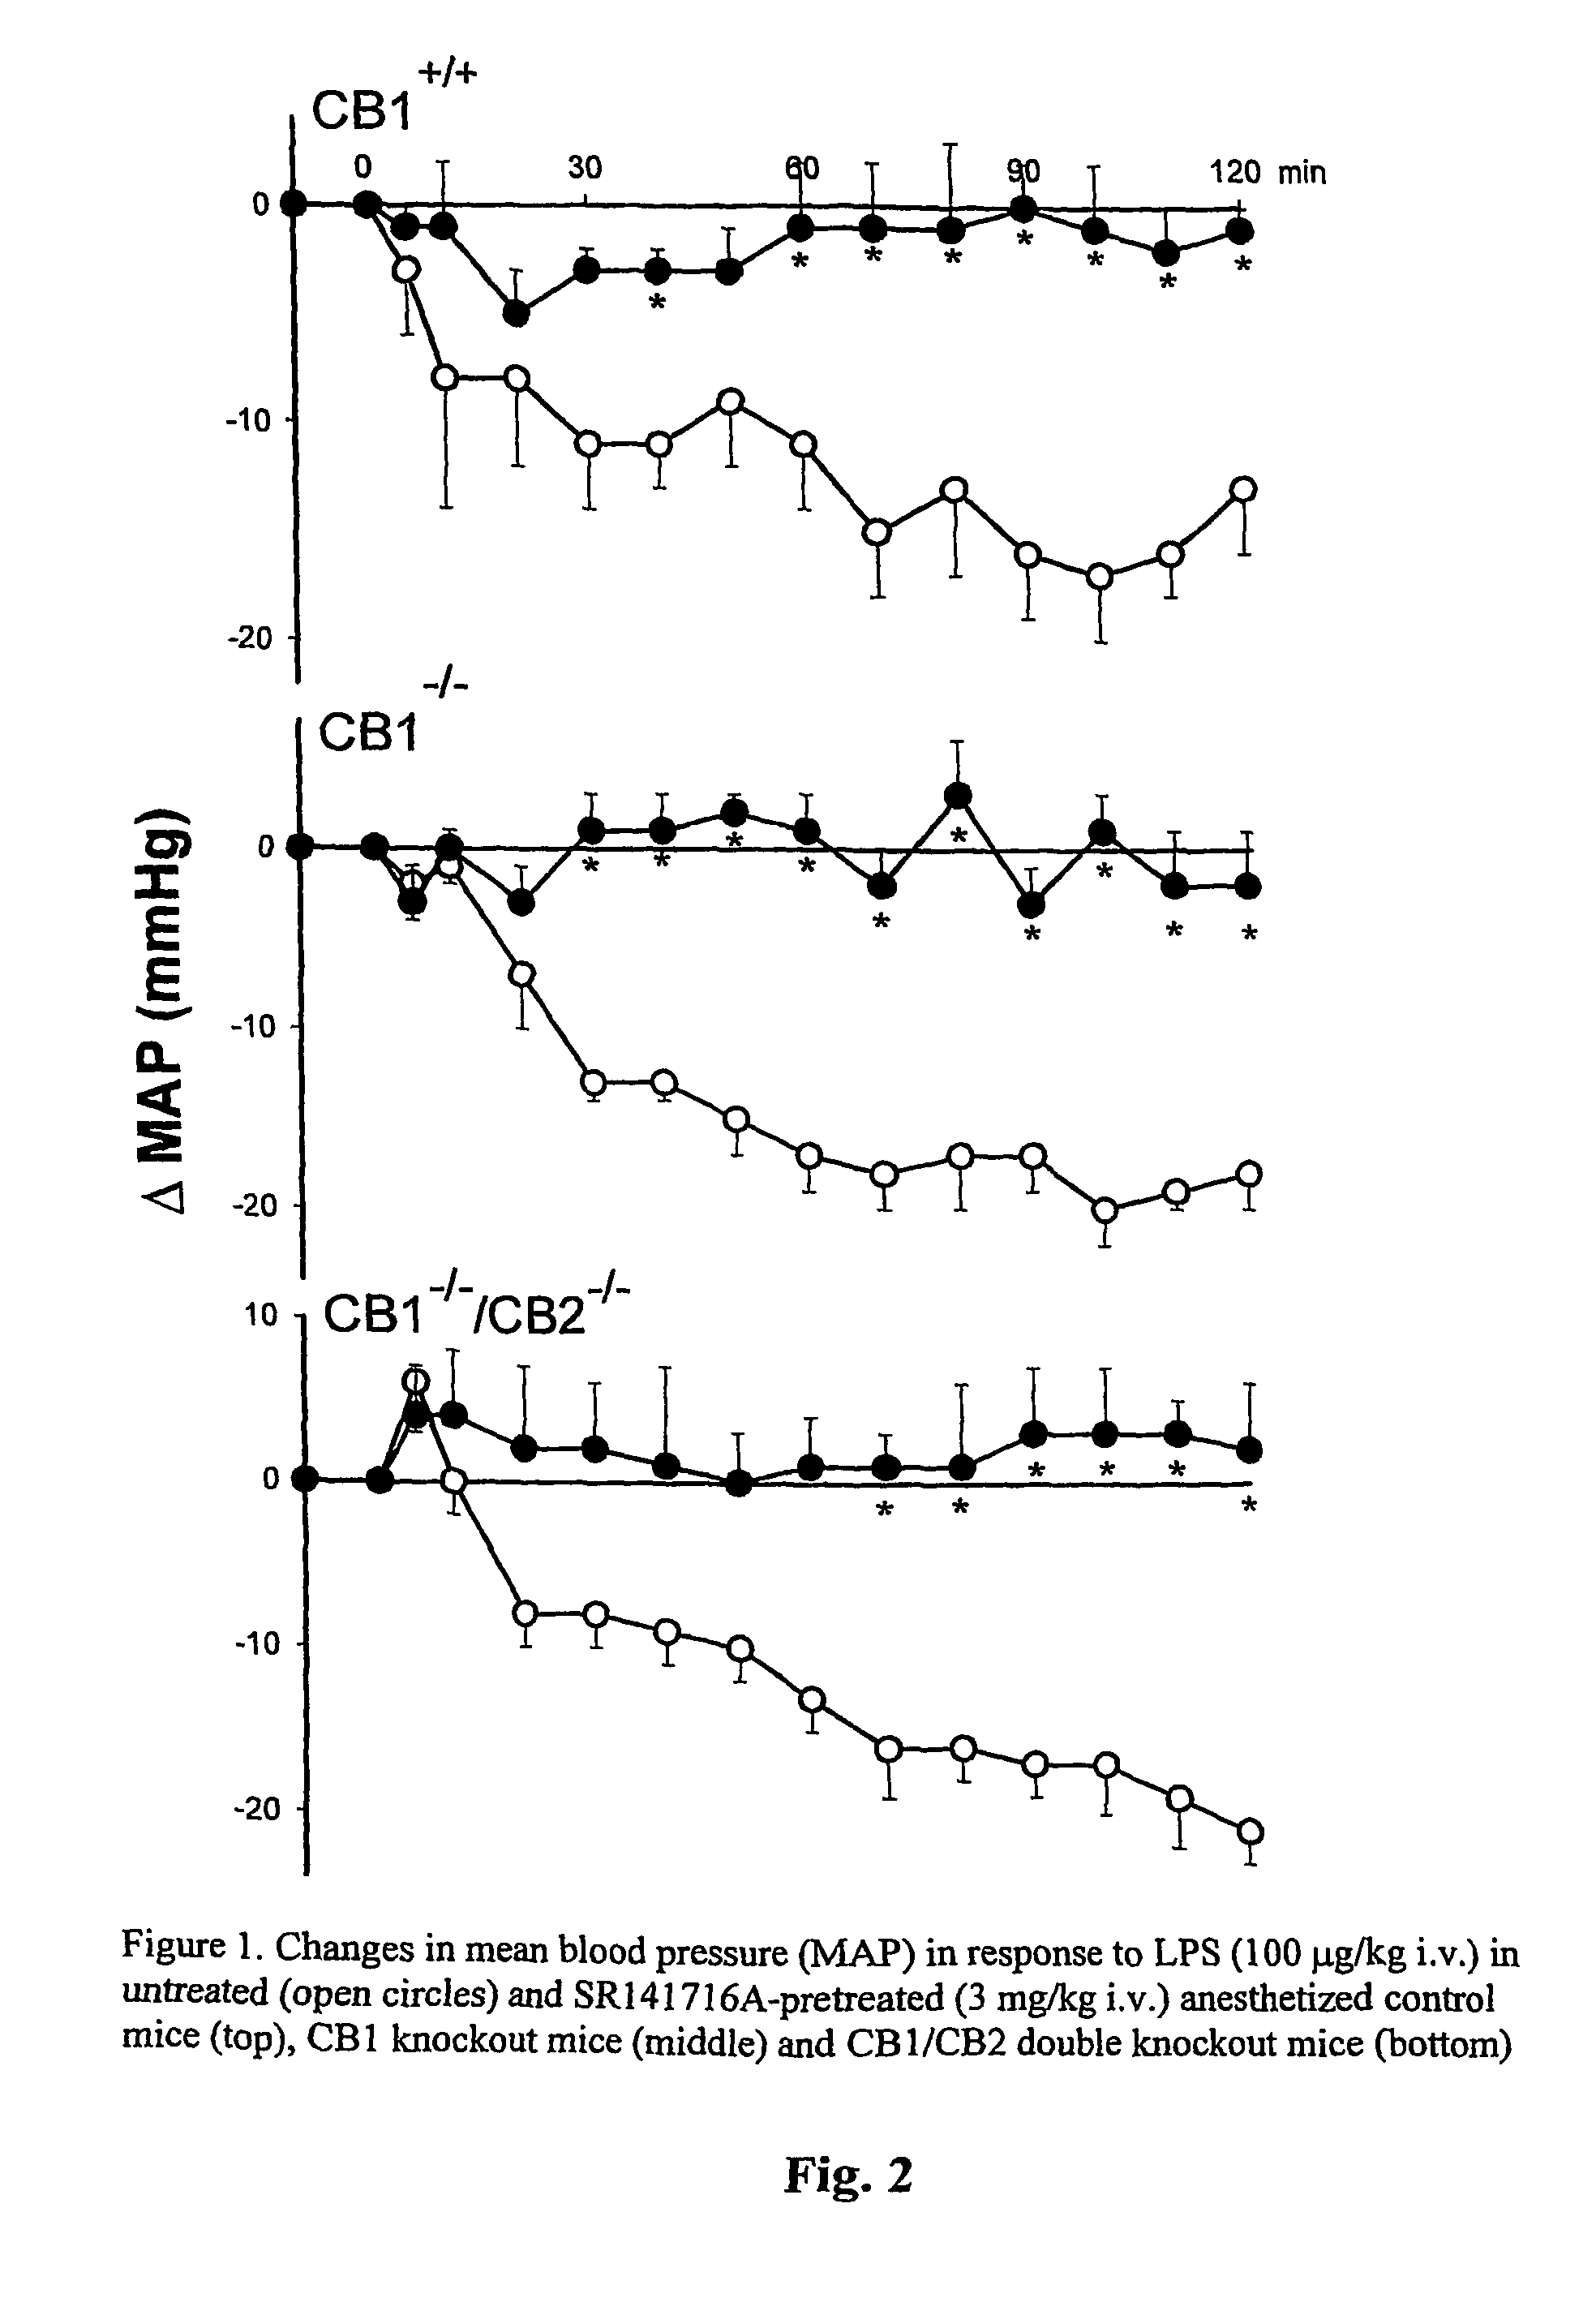 Vasoconstrictor cannabinoid analogs